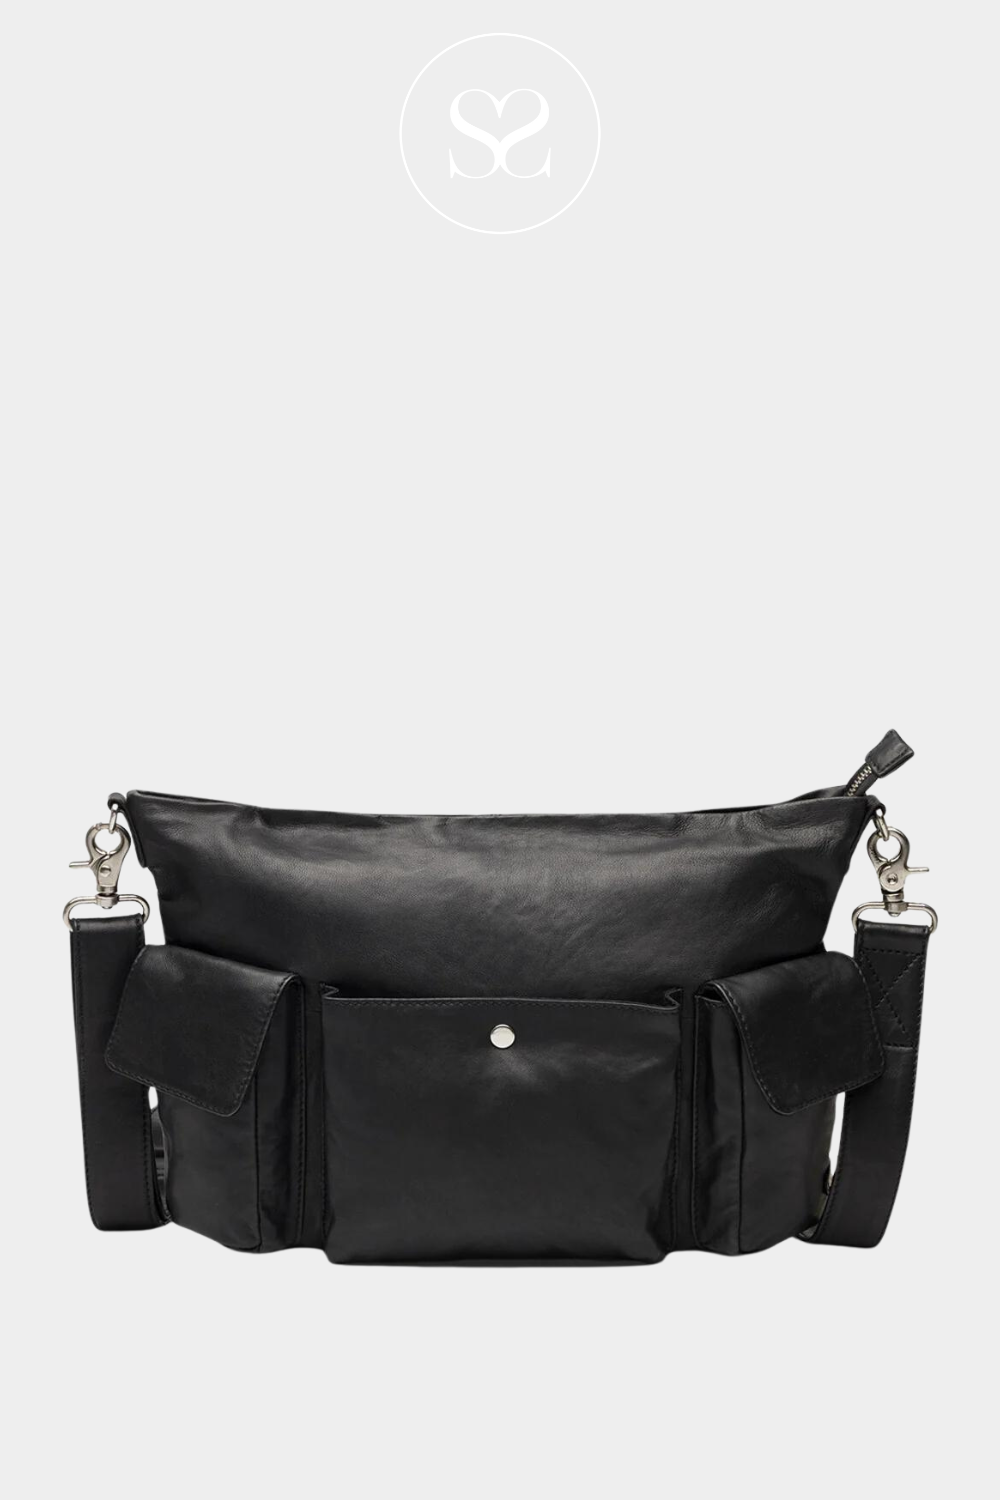 black leather crossbody shoulder bag from Depeche